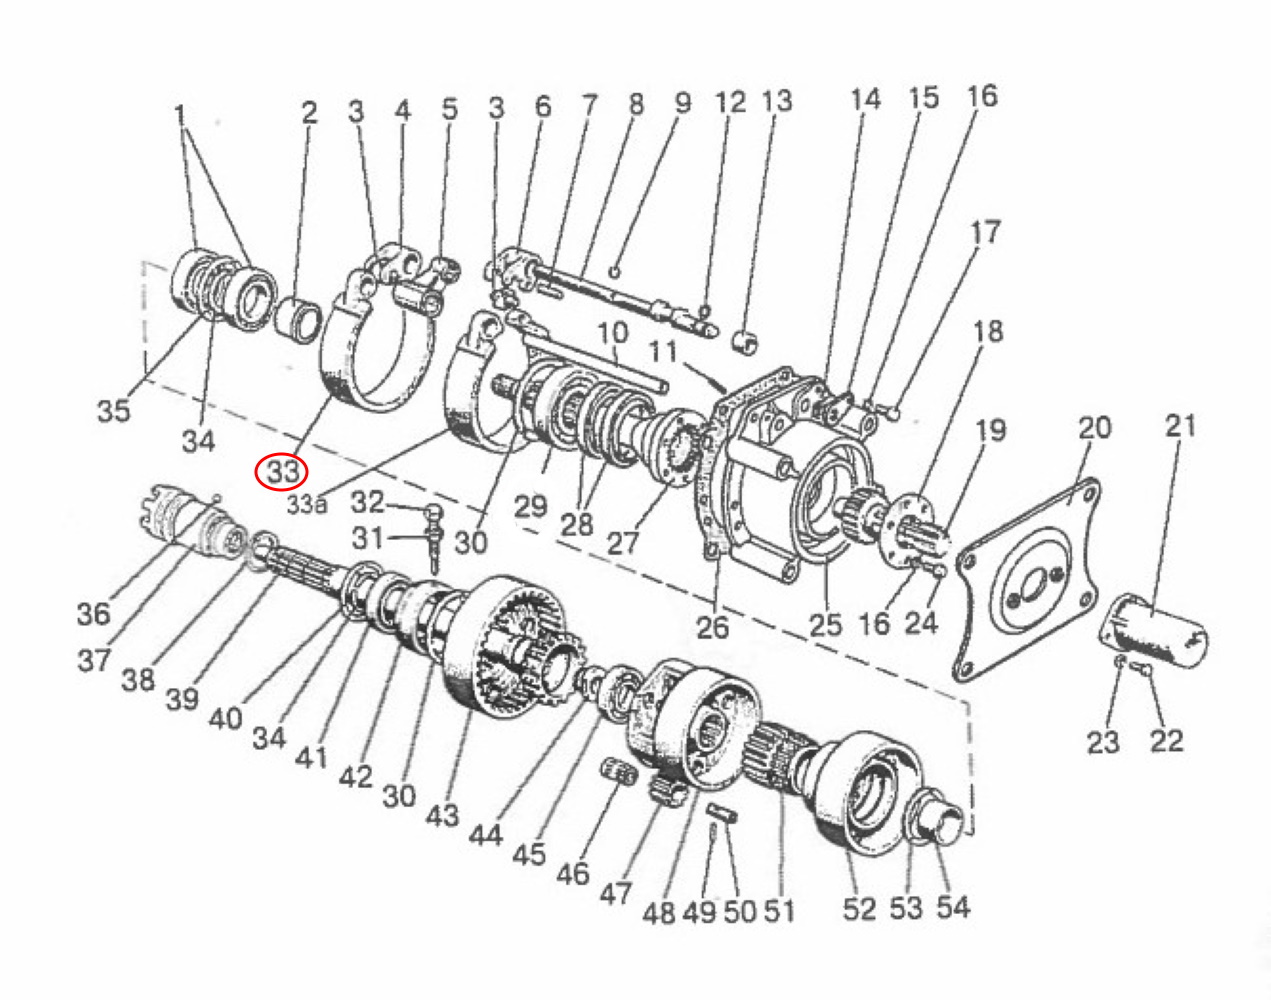 Bremsband Original 56mm Zapfwellengetriebe | 85-420210-01 - 1